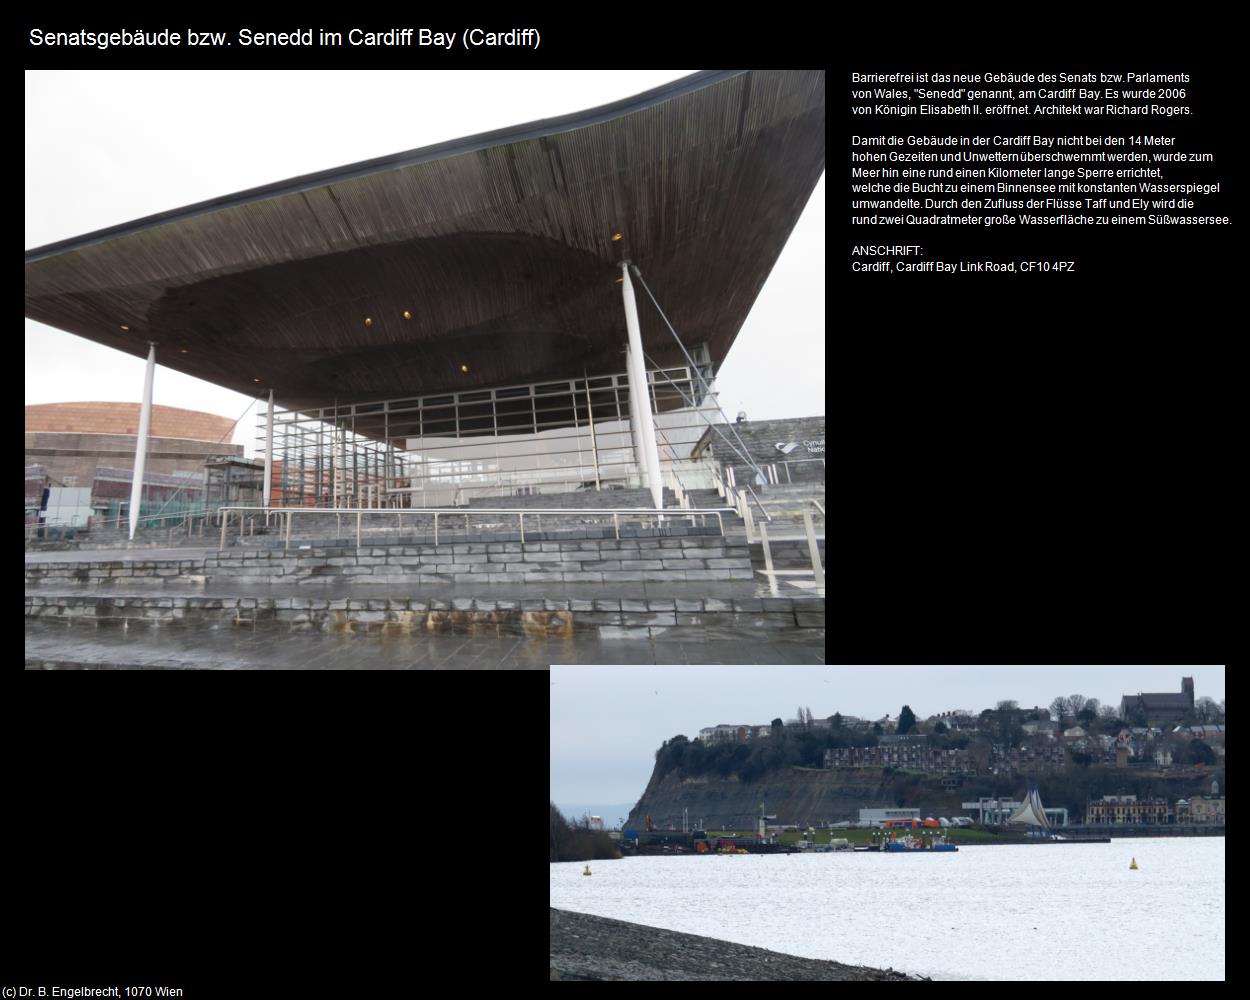 Senatsgebäude bzw. Senedd im Cardiff Bay  (Cardiff, Wales) in Kulturatlas-ENGLAND und WALES